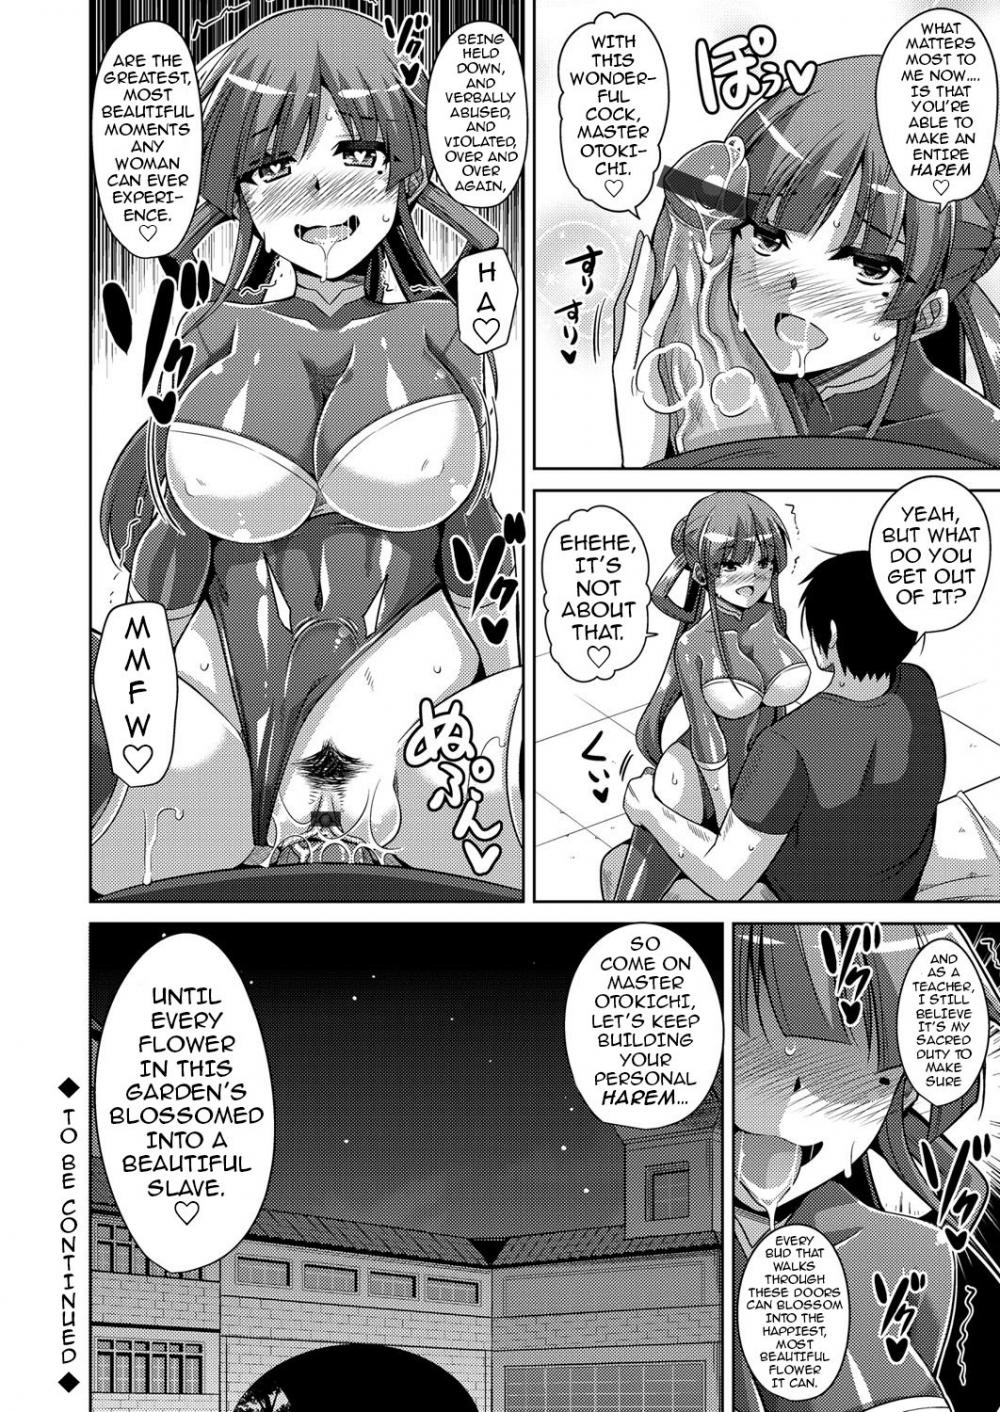 Hentai Manga Comic-The Slave Girls of the Flower Garden-Chapter 3-18